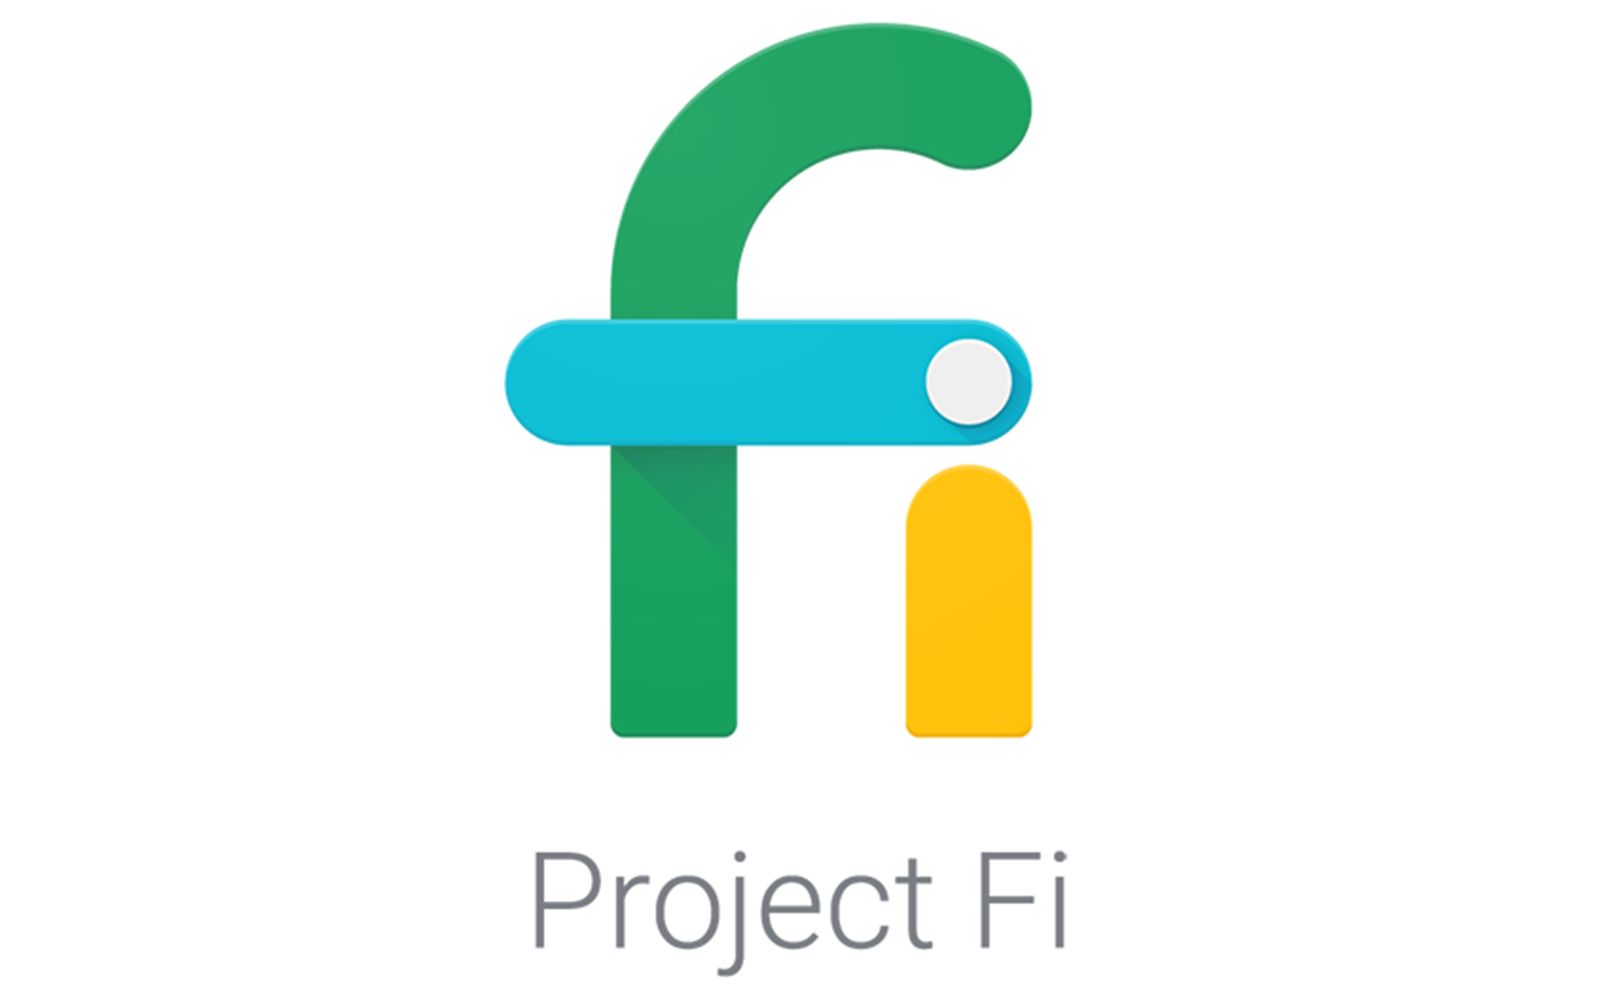 google project fi network plans leak unused data refunds nexus 6 nova finance data across devices and more image 1